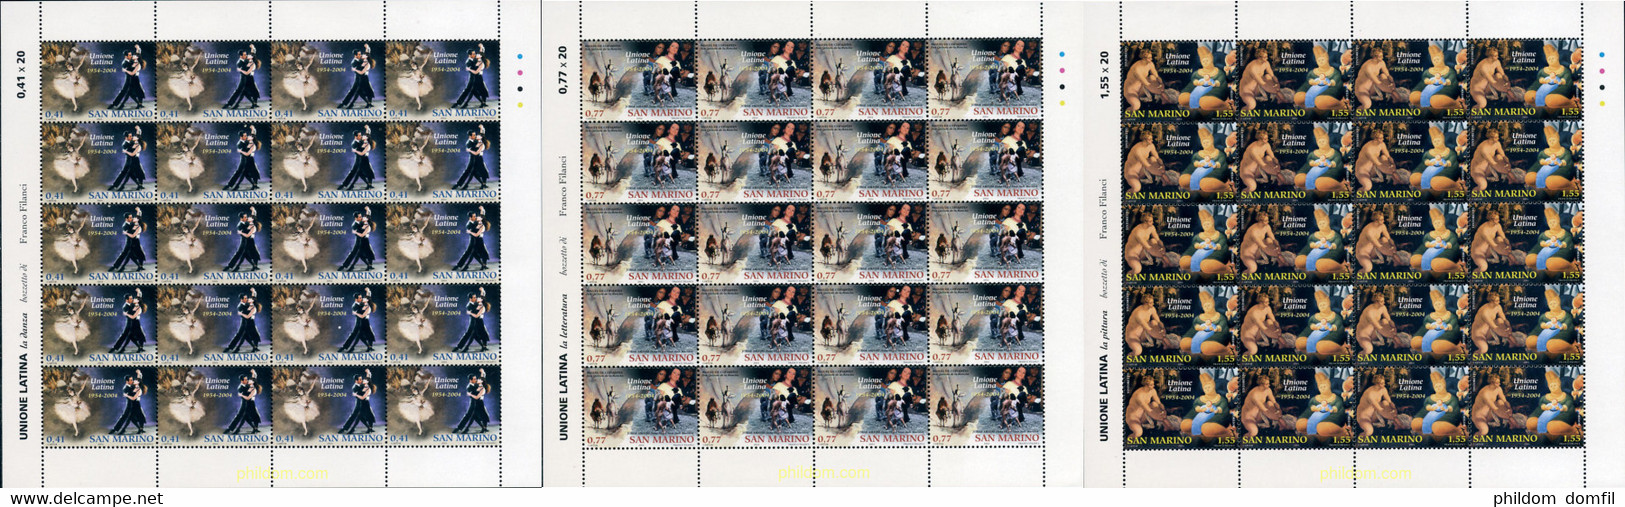 143534 MNH SAN MARINO 2004 50 ANIVERSARIO DE LA UNION LATINA - Used Stamps